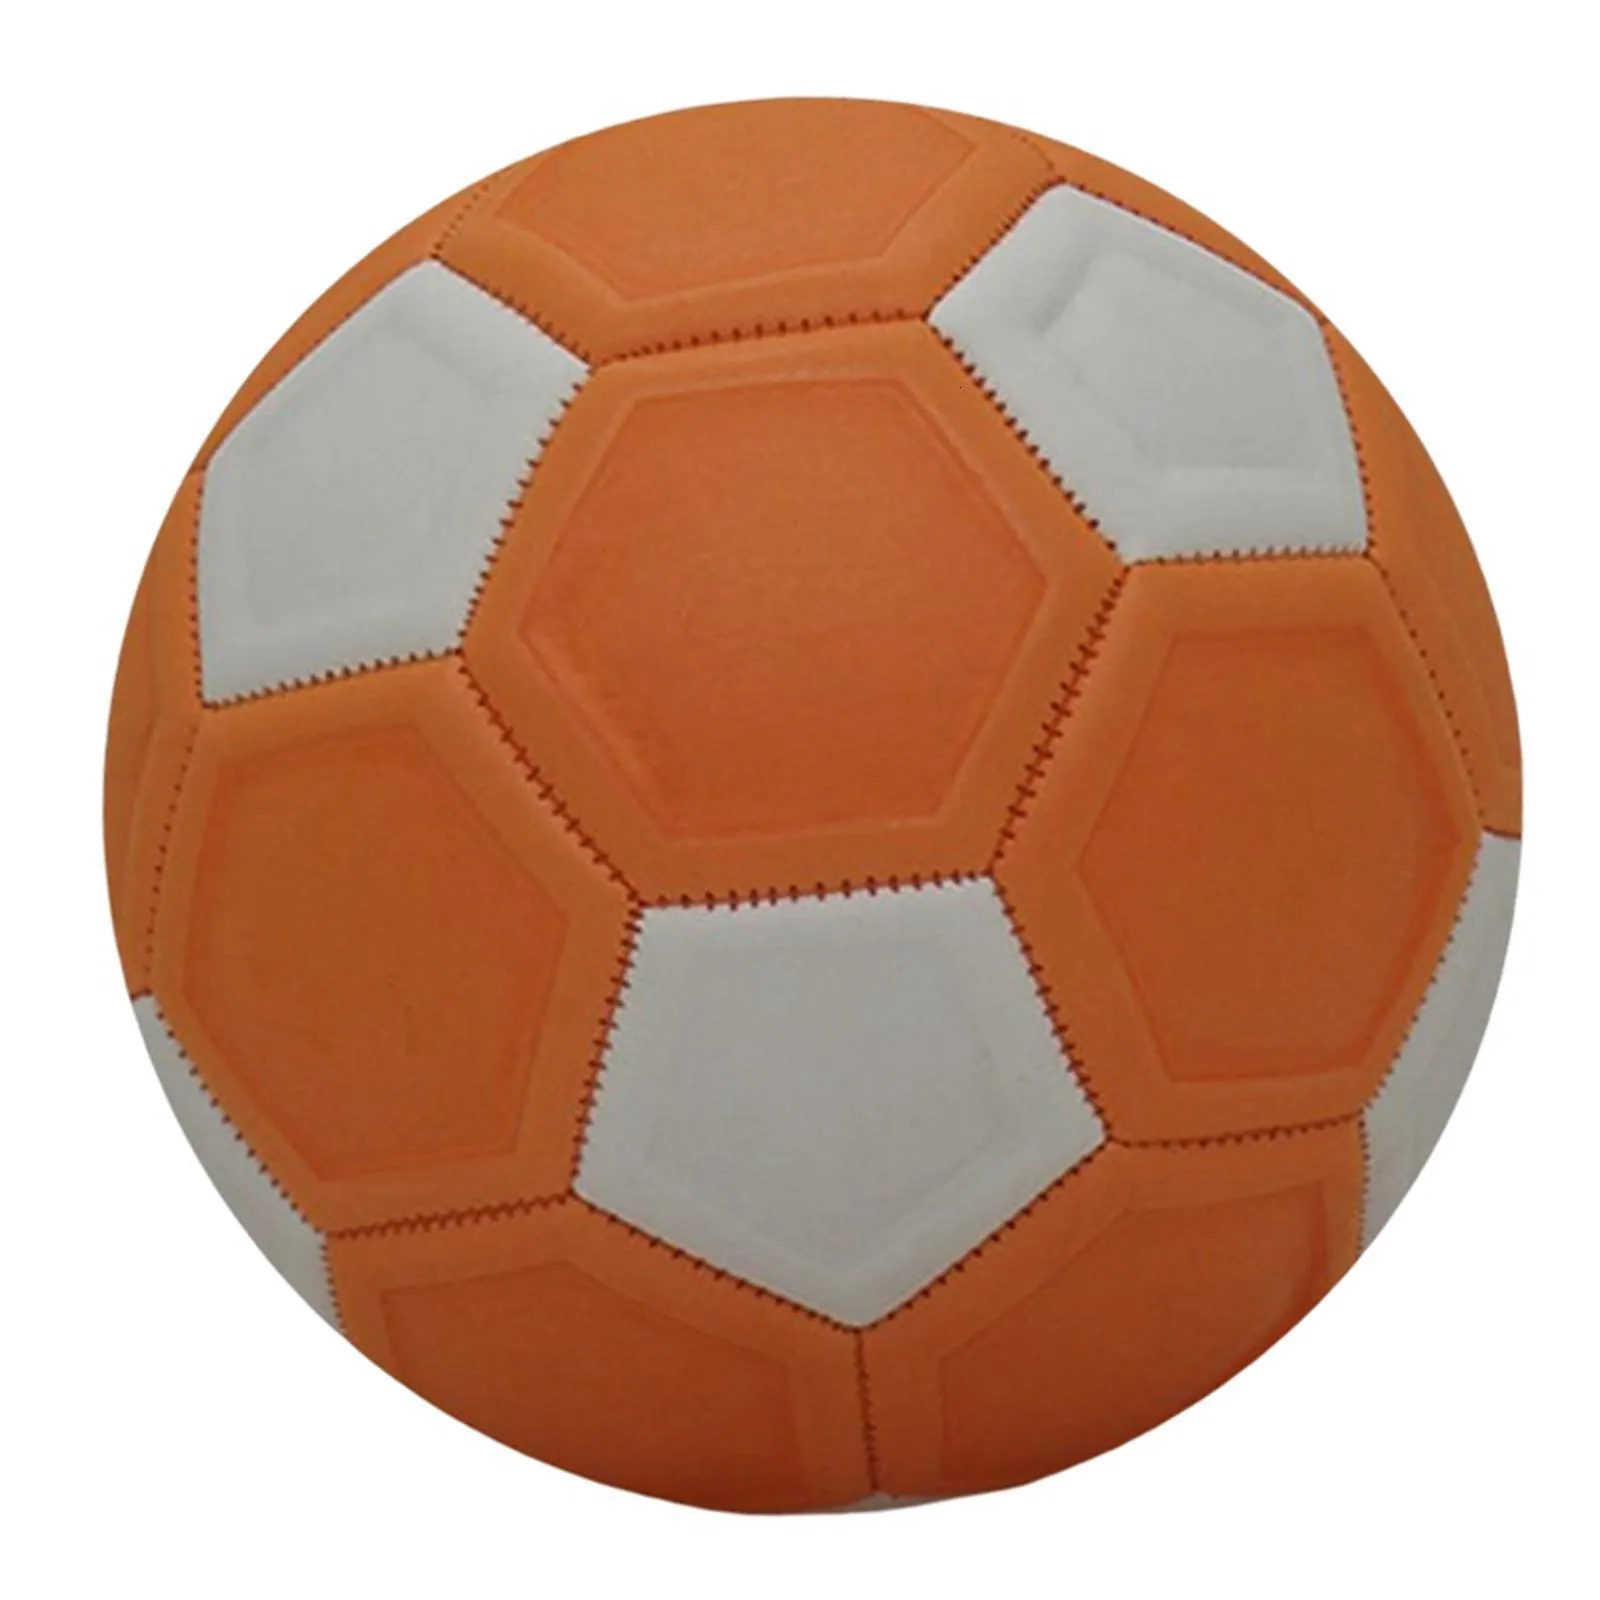 Soccer Ball Size 4 Practice Futsal for Aged 5 6 7 8 9 10 11 12 13 Girls Boys